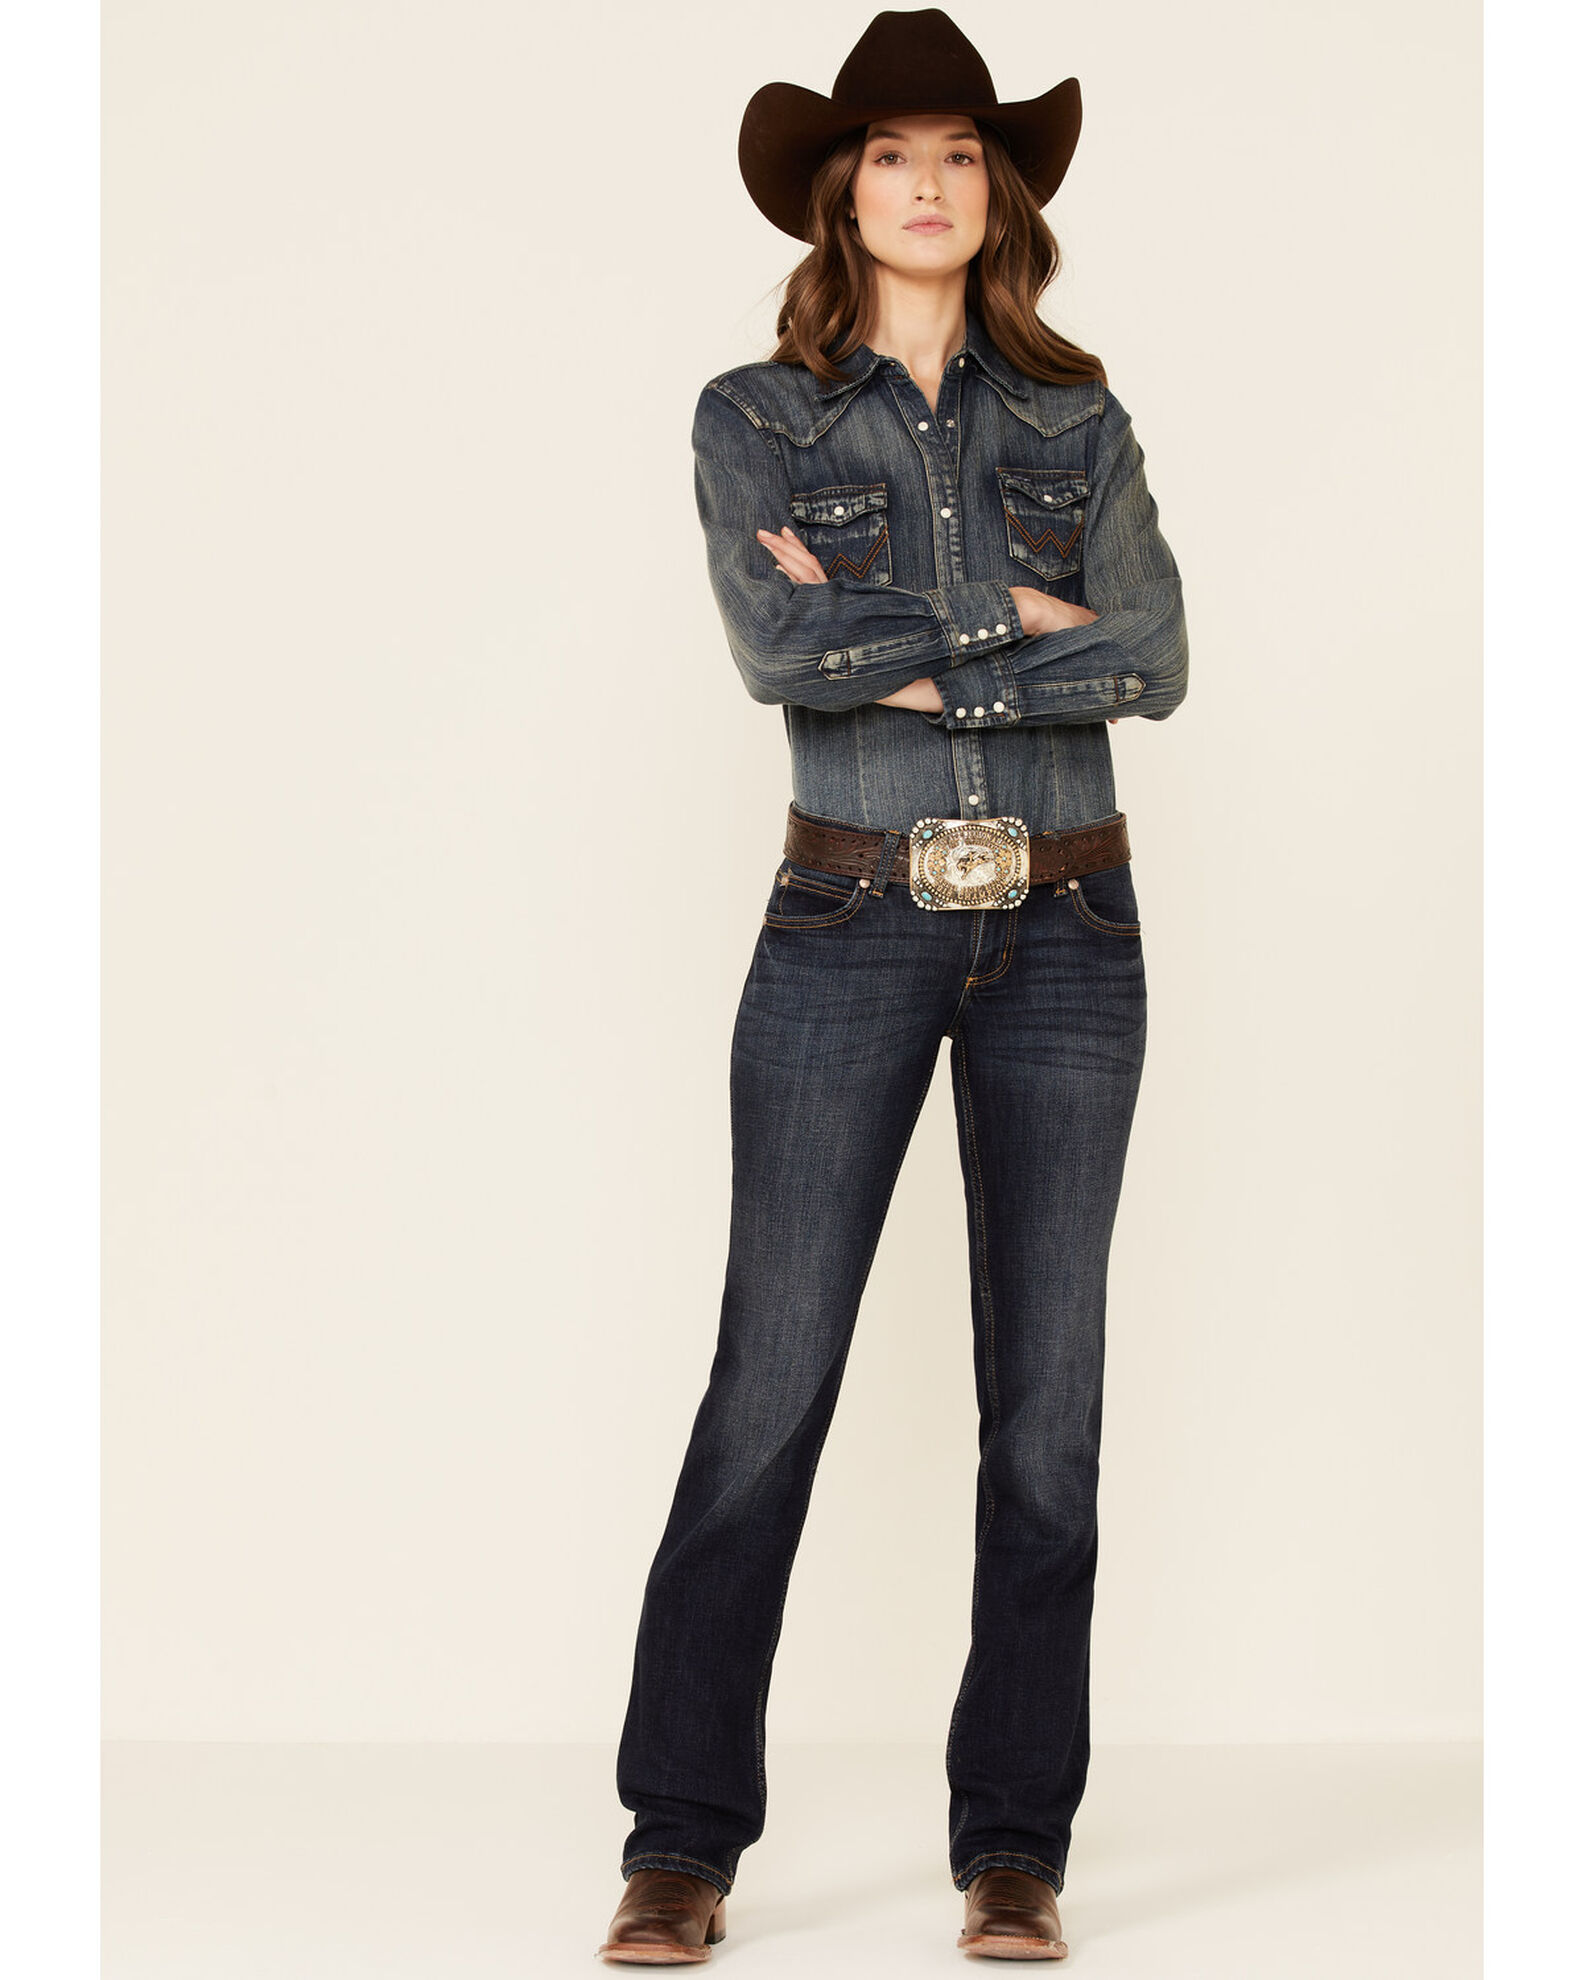 Product Name: Wrangler Retro Women's Dark Wash Sadie Jeans